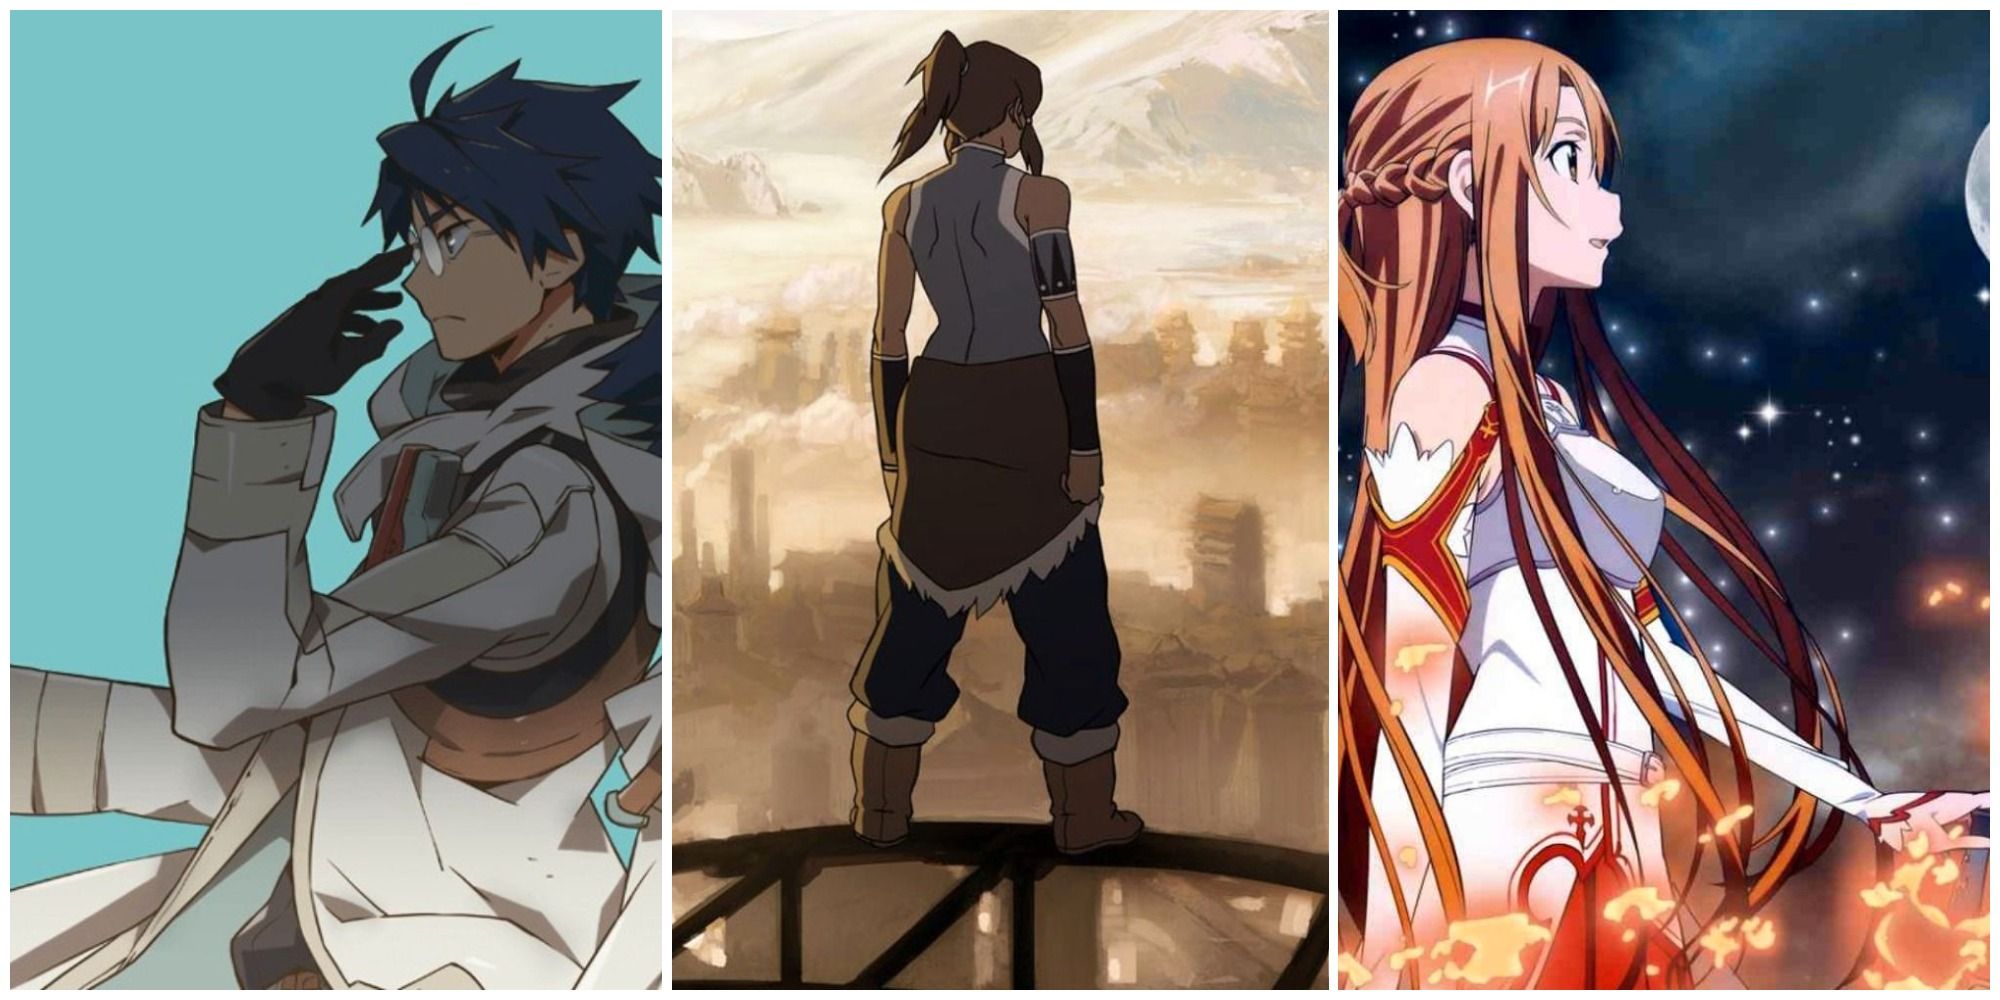 Square Enix Releases Final Fantasy XIV Anime Short Set In Limsa Lominsa -  MMOs.com